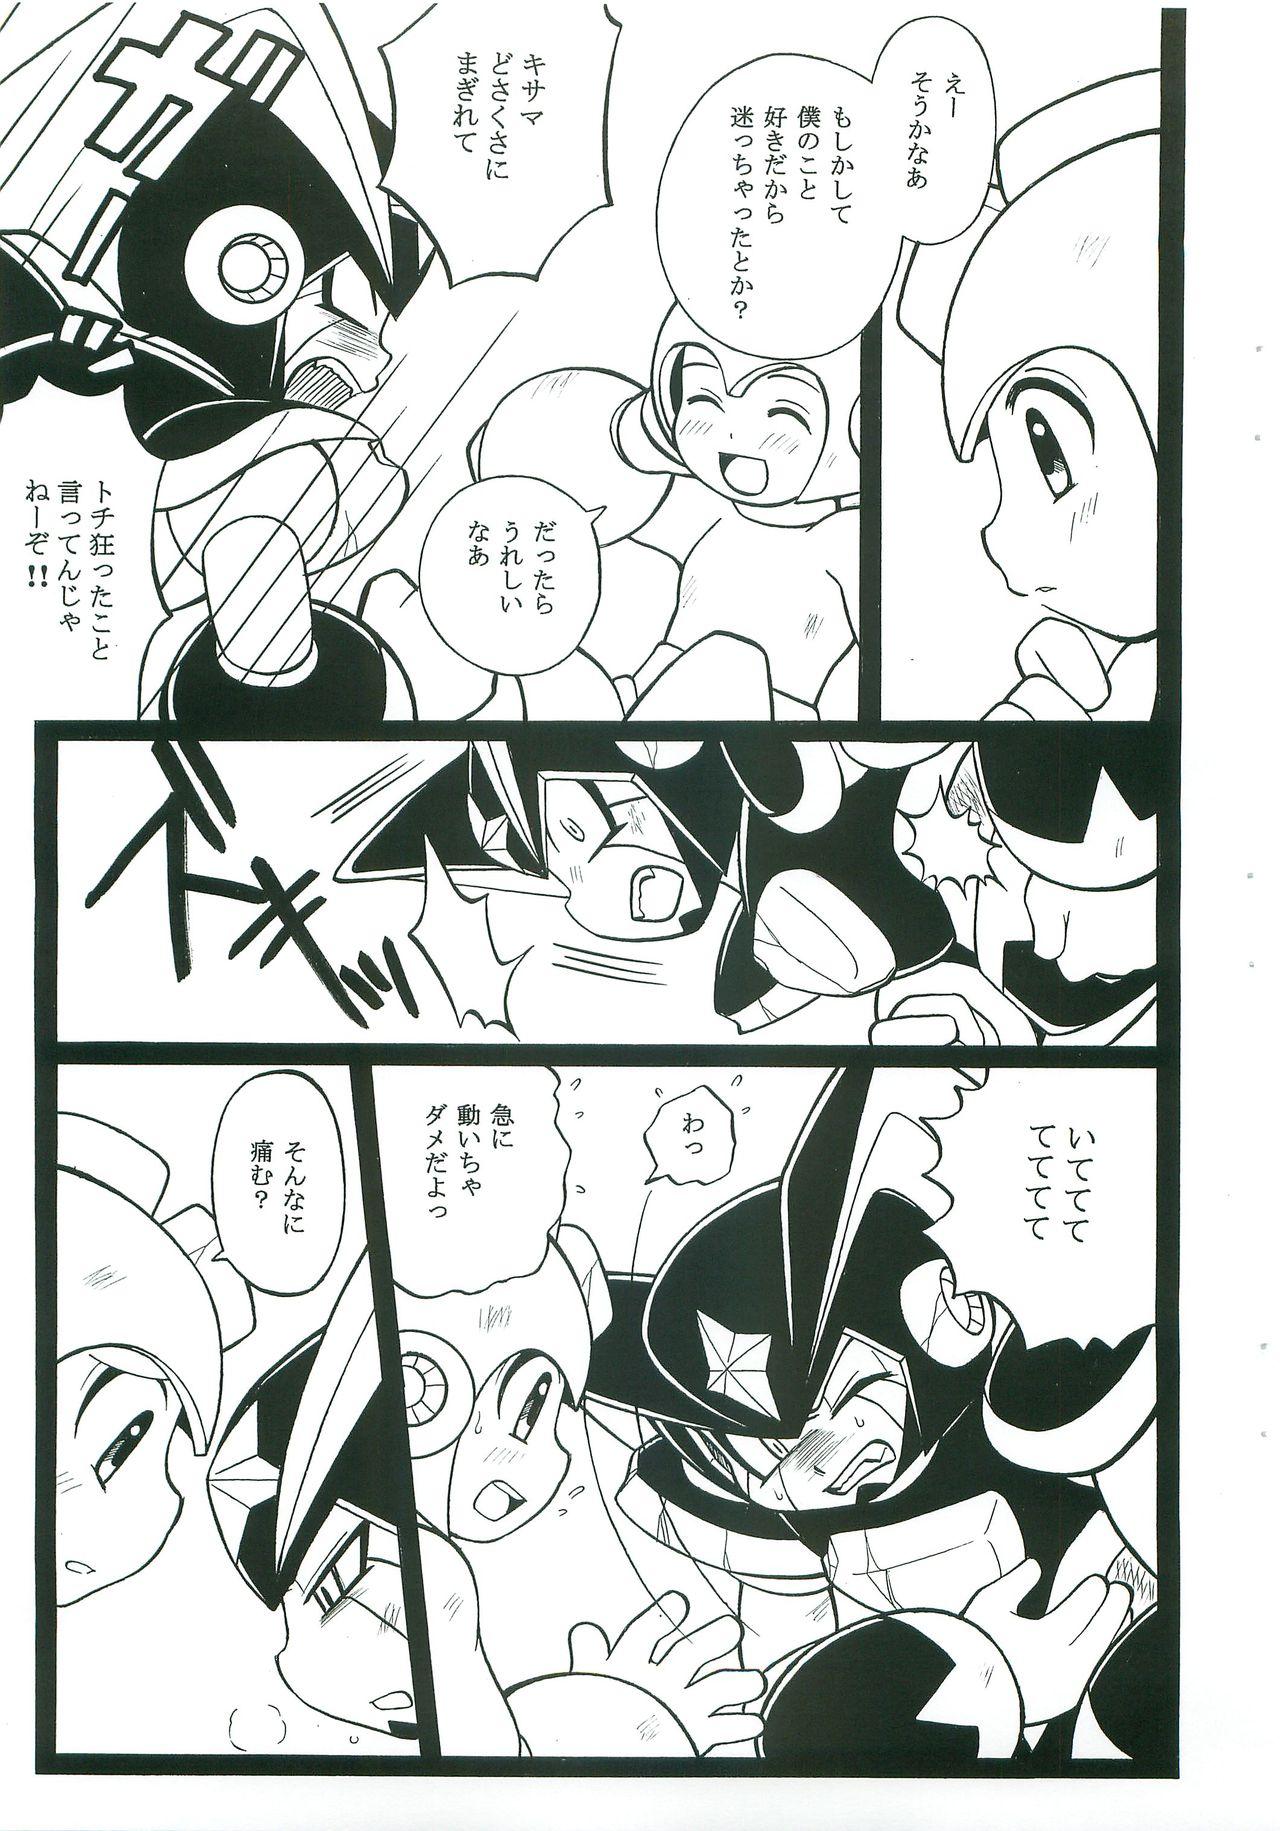 Upskirt appassionato - Megaman Money Talks - Page 4